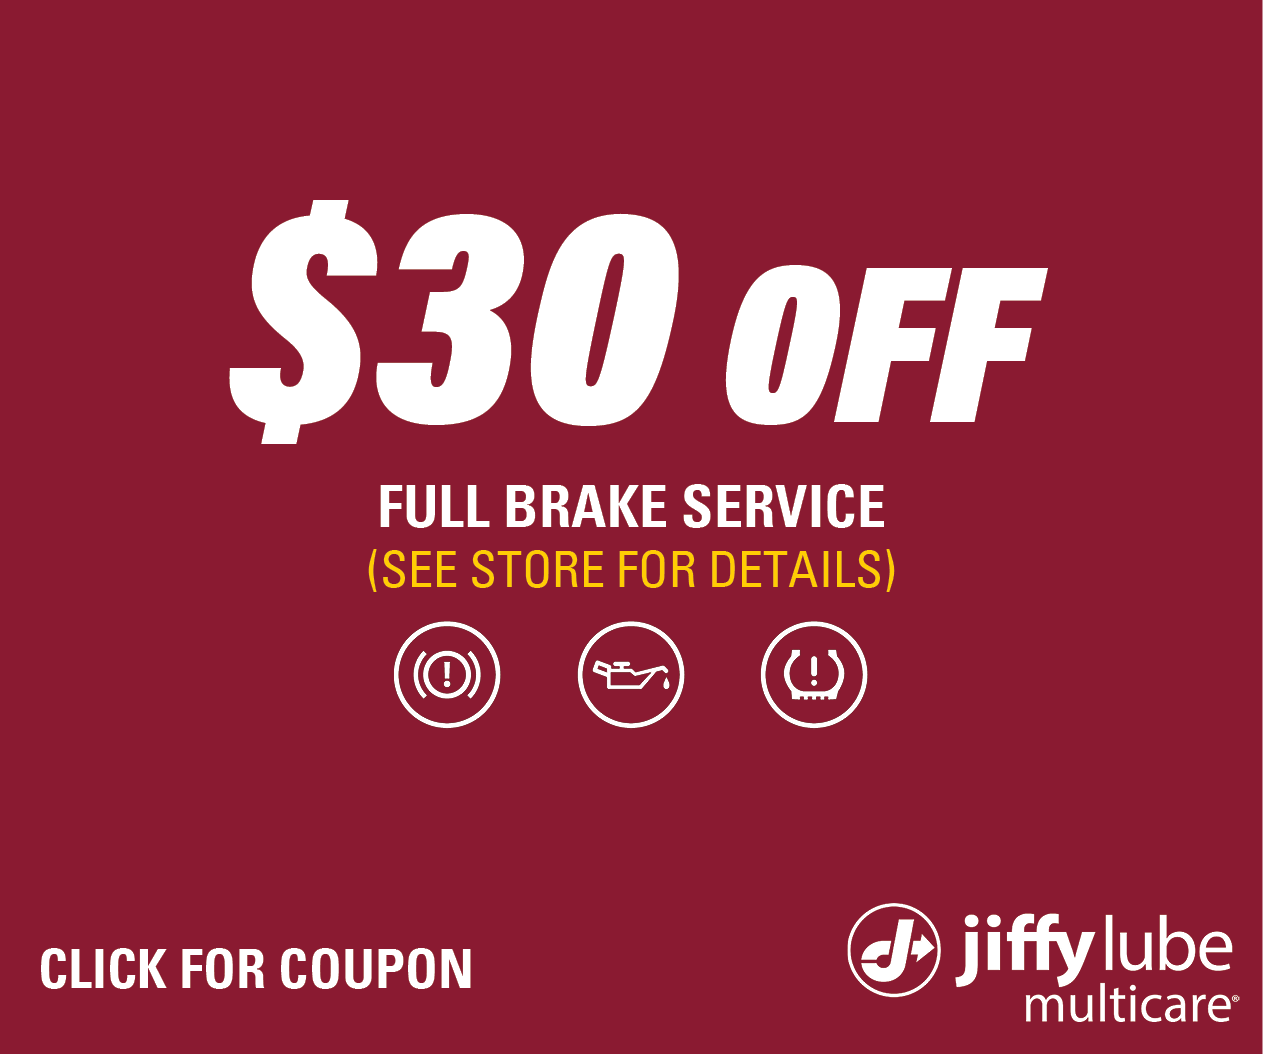 $30 OFF Full Brake Service Website Image (Bronco Lube)